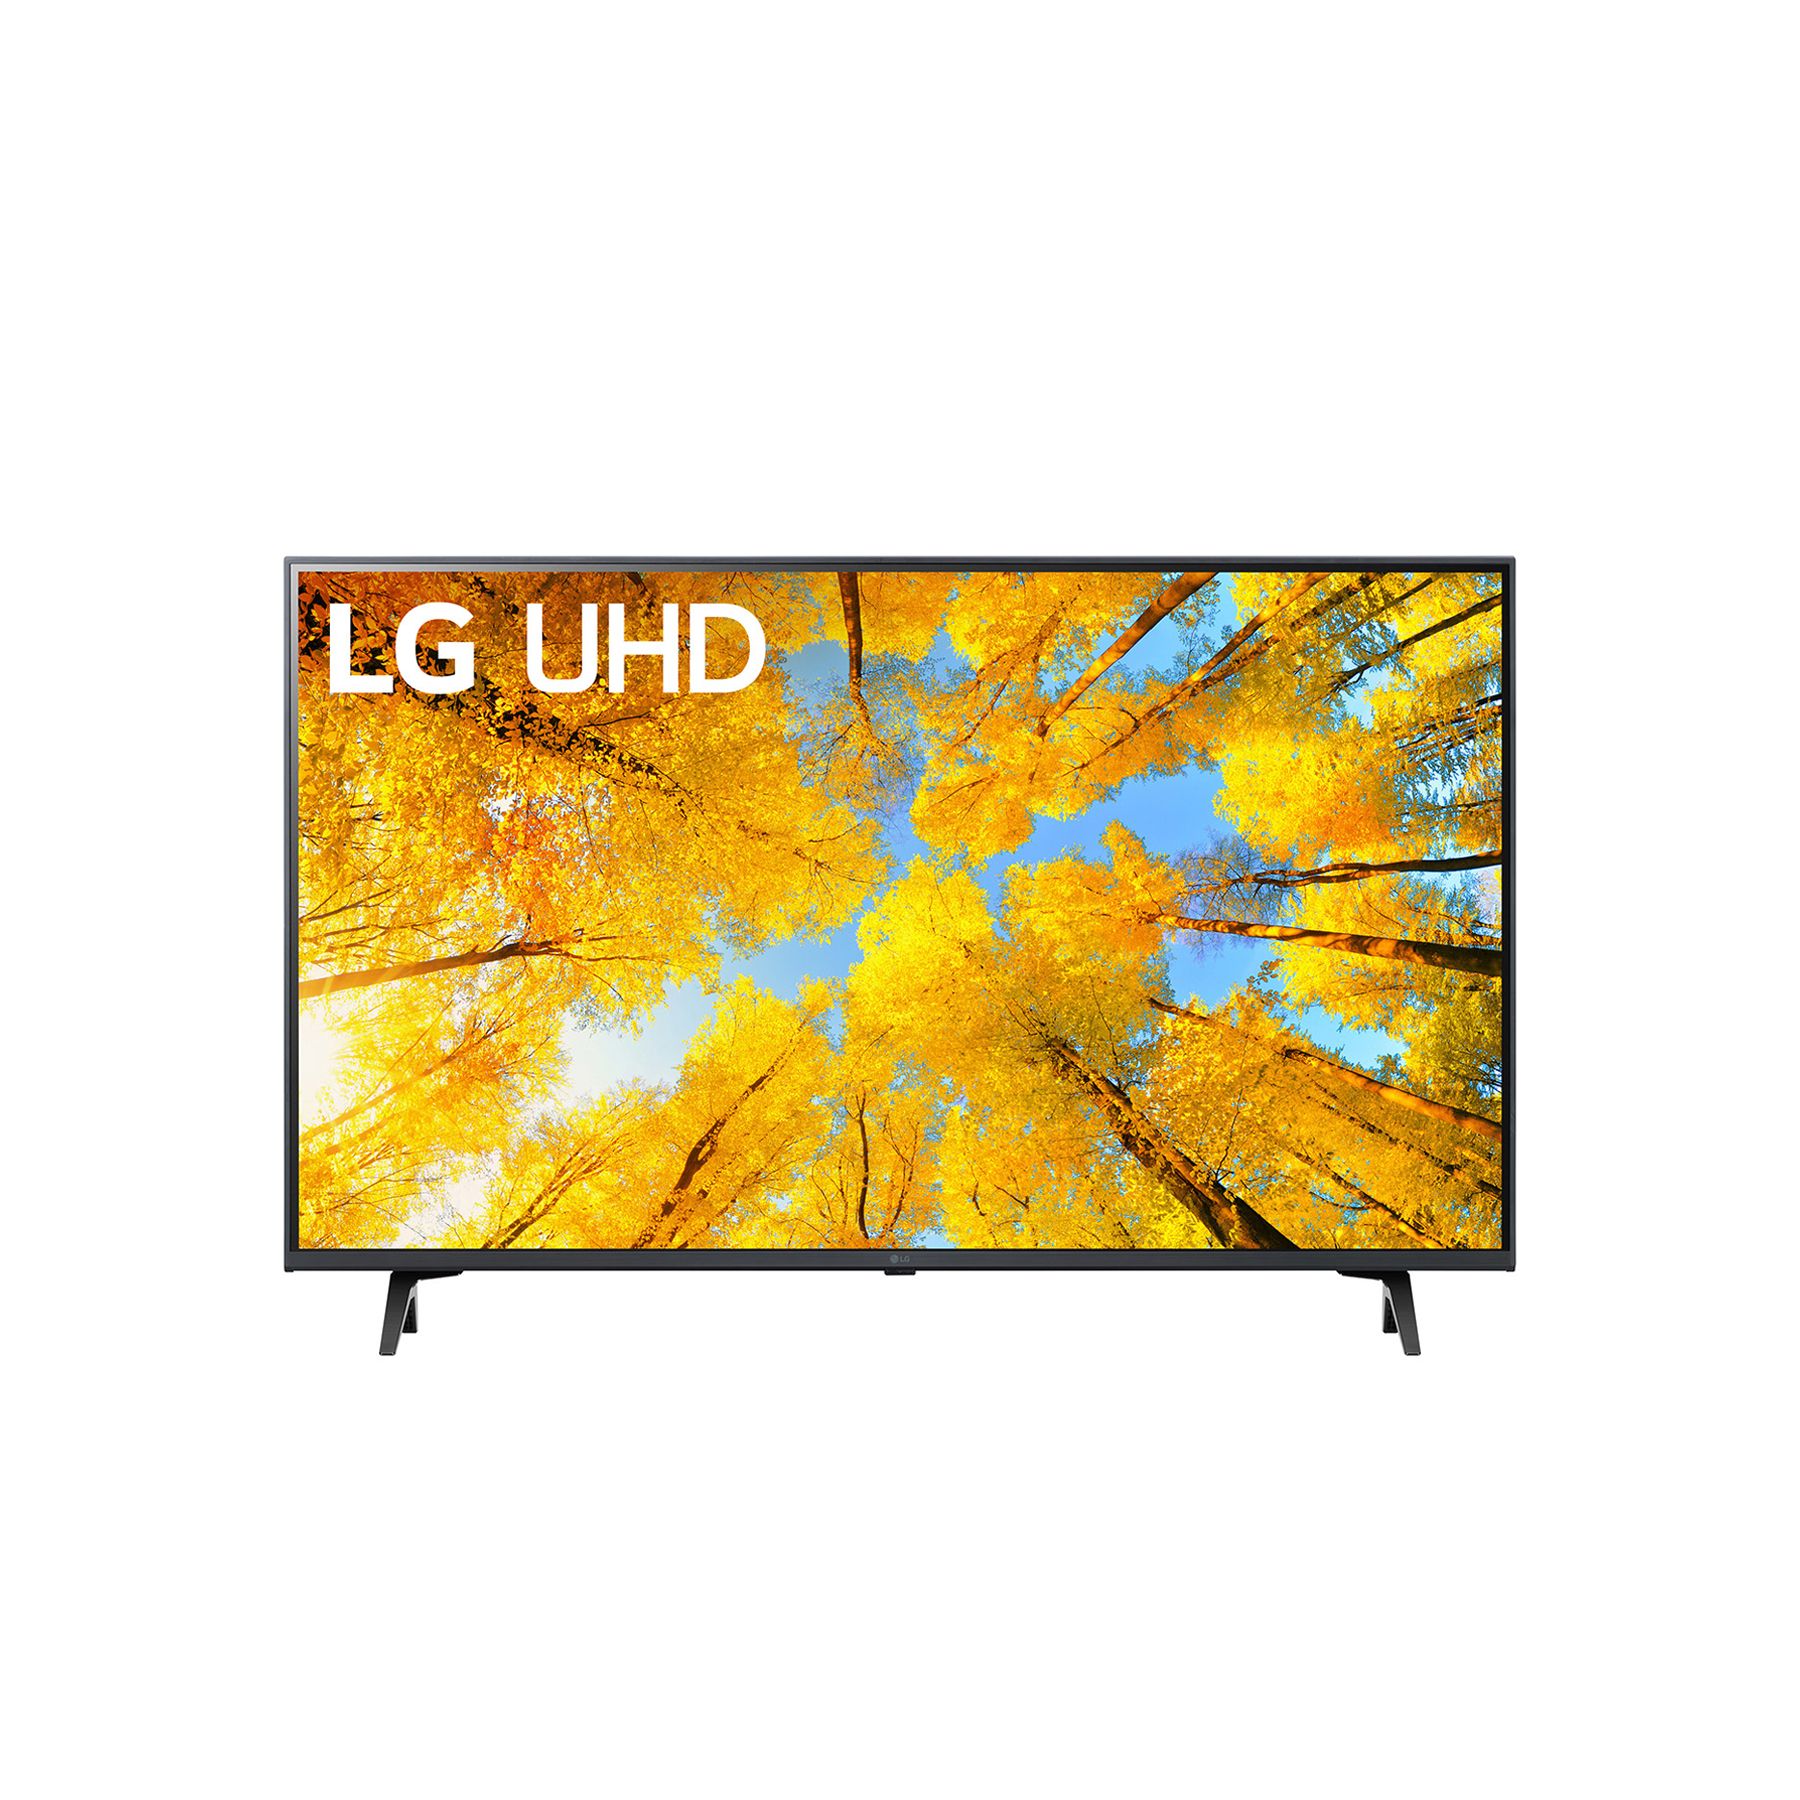 LG 43 Class 4K UHD 2160P WebOS22 Smart TV with Active HDR UQ7590 Series  43UQ7590PUB